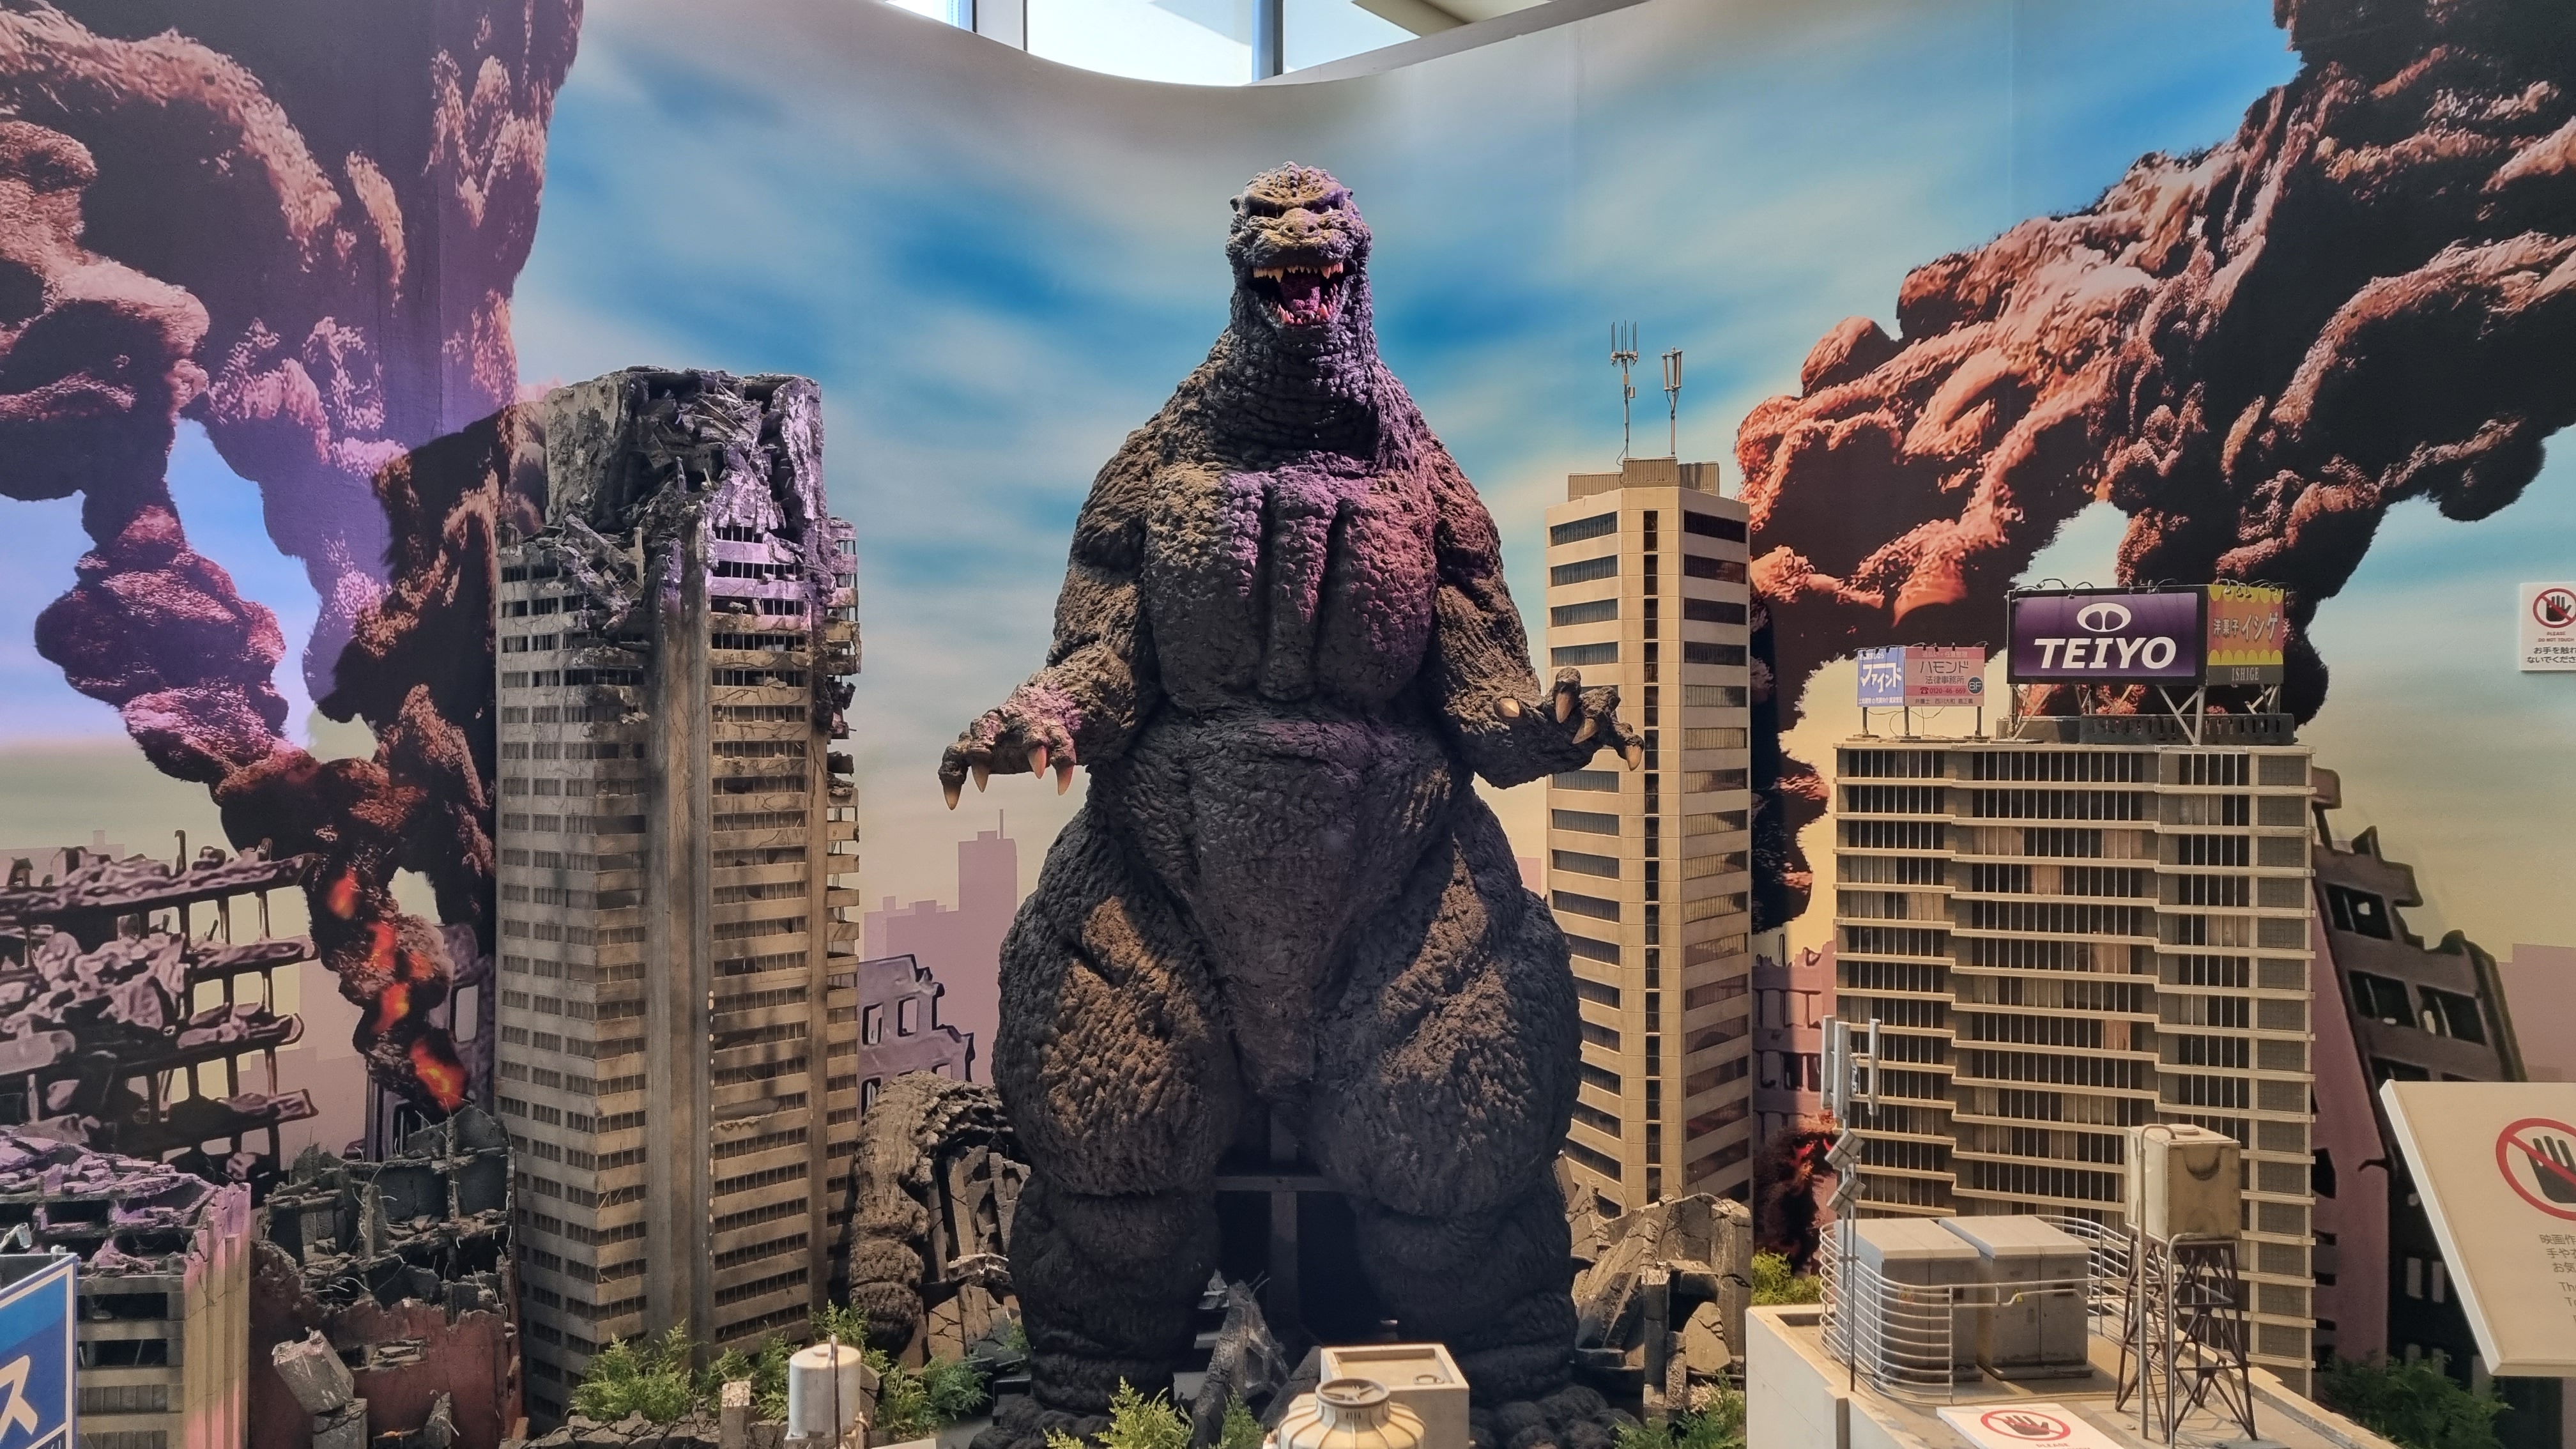 Geek It! Otaku Out and About: Godzilla mania in Japan